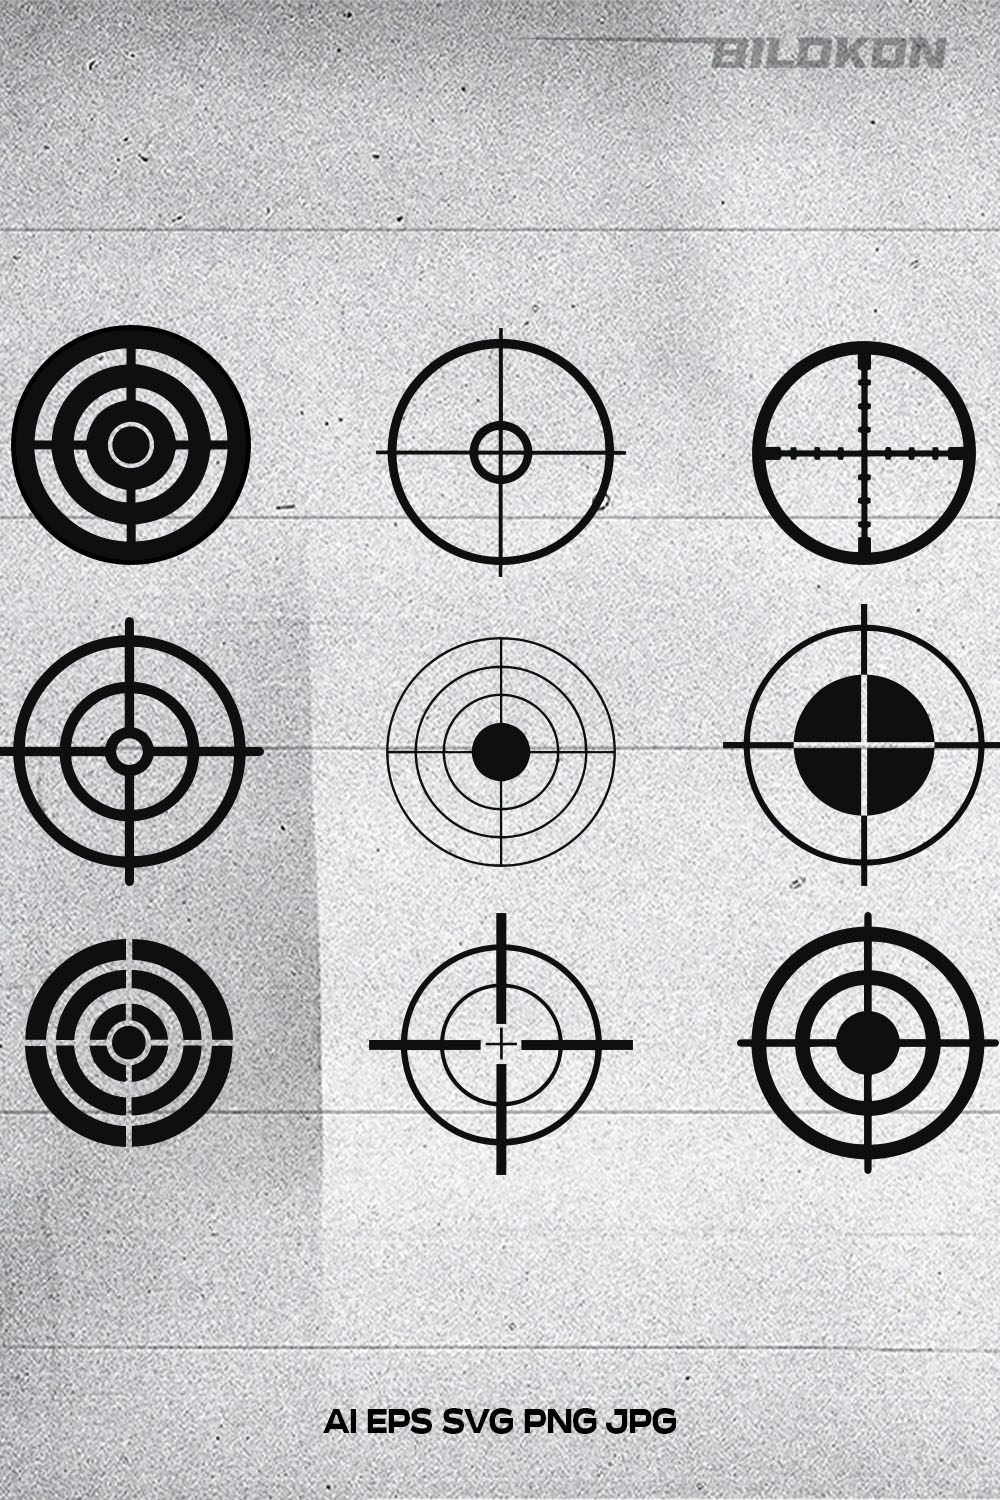 Sniper Aim Pointer SVG vector pinterest image.